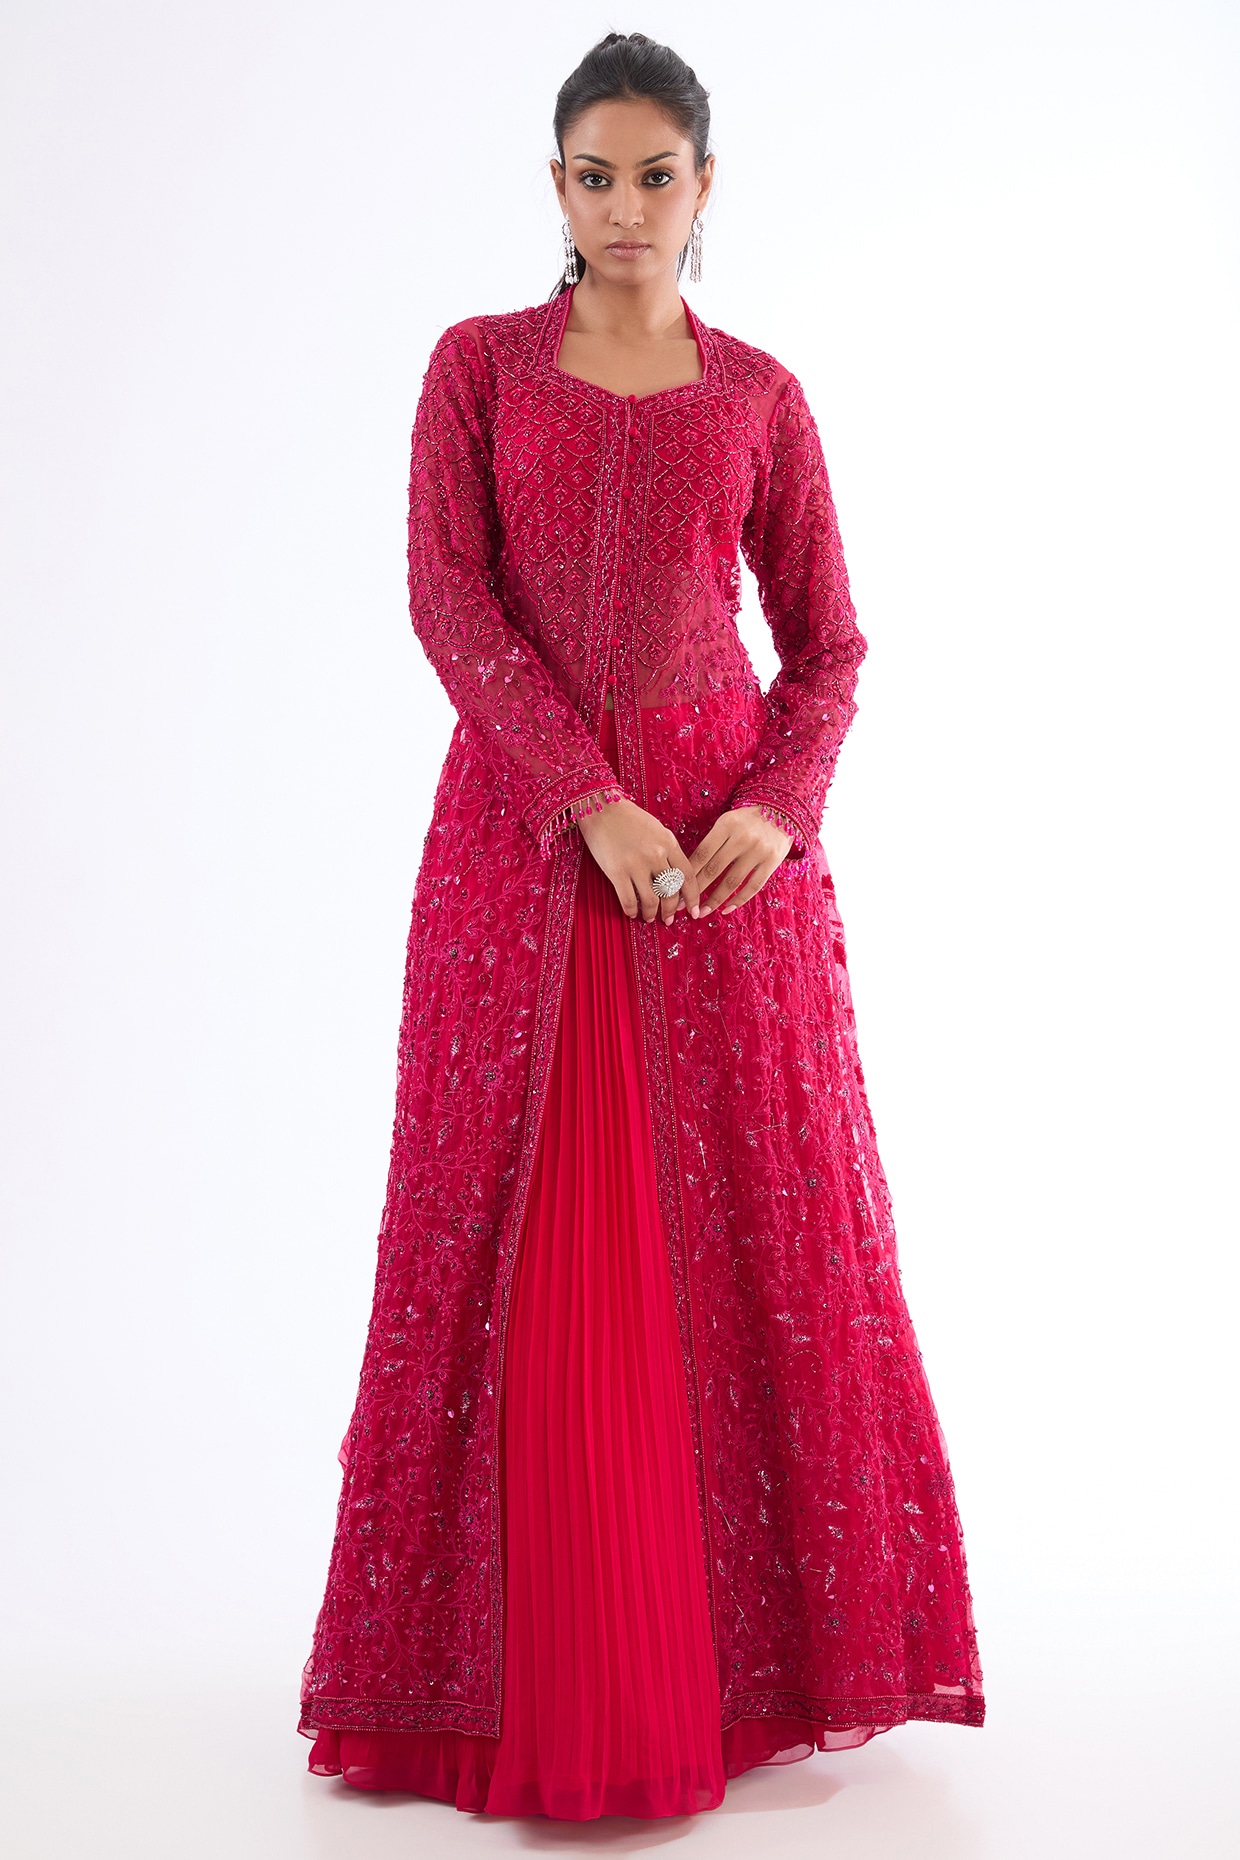 CHIKA Floral Jacquard Jacket Dress | Jacket dress, Indian fashion dresses,  Stylish dresses for girls